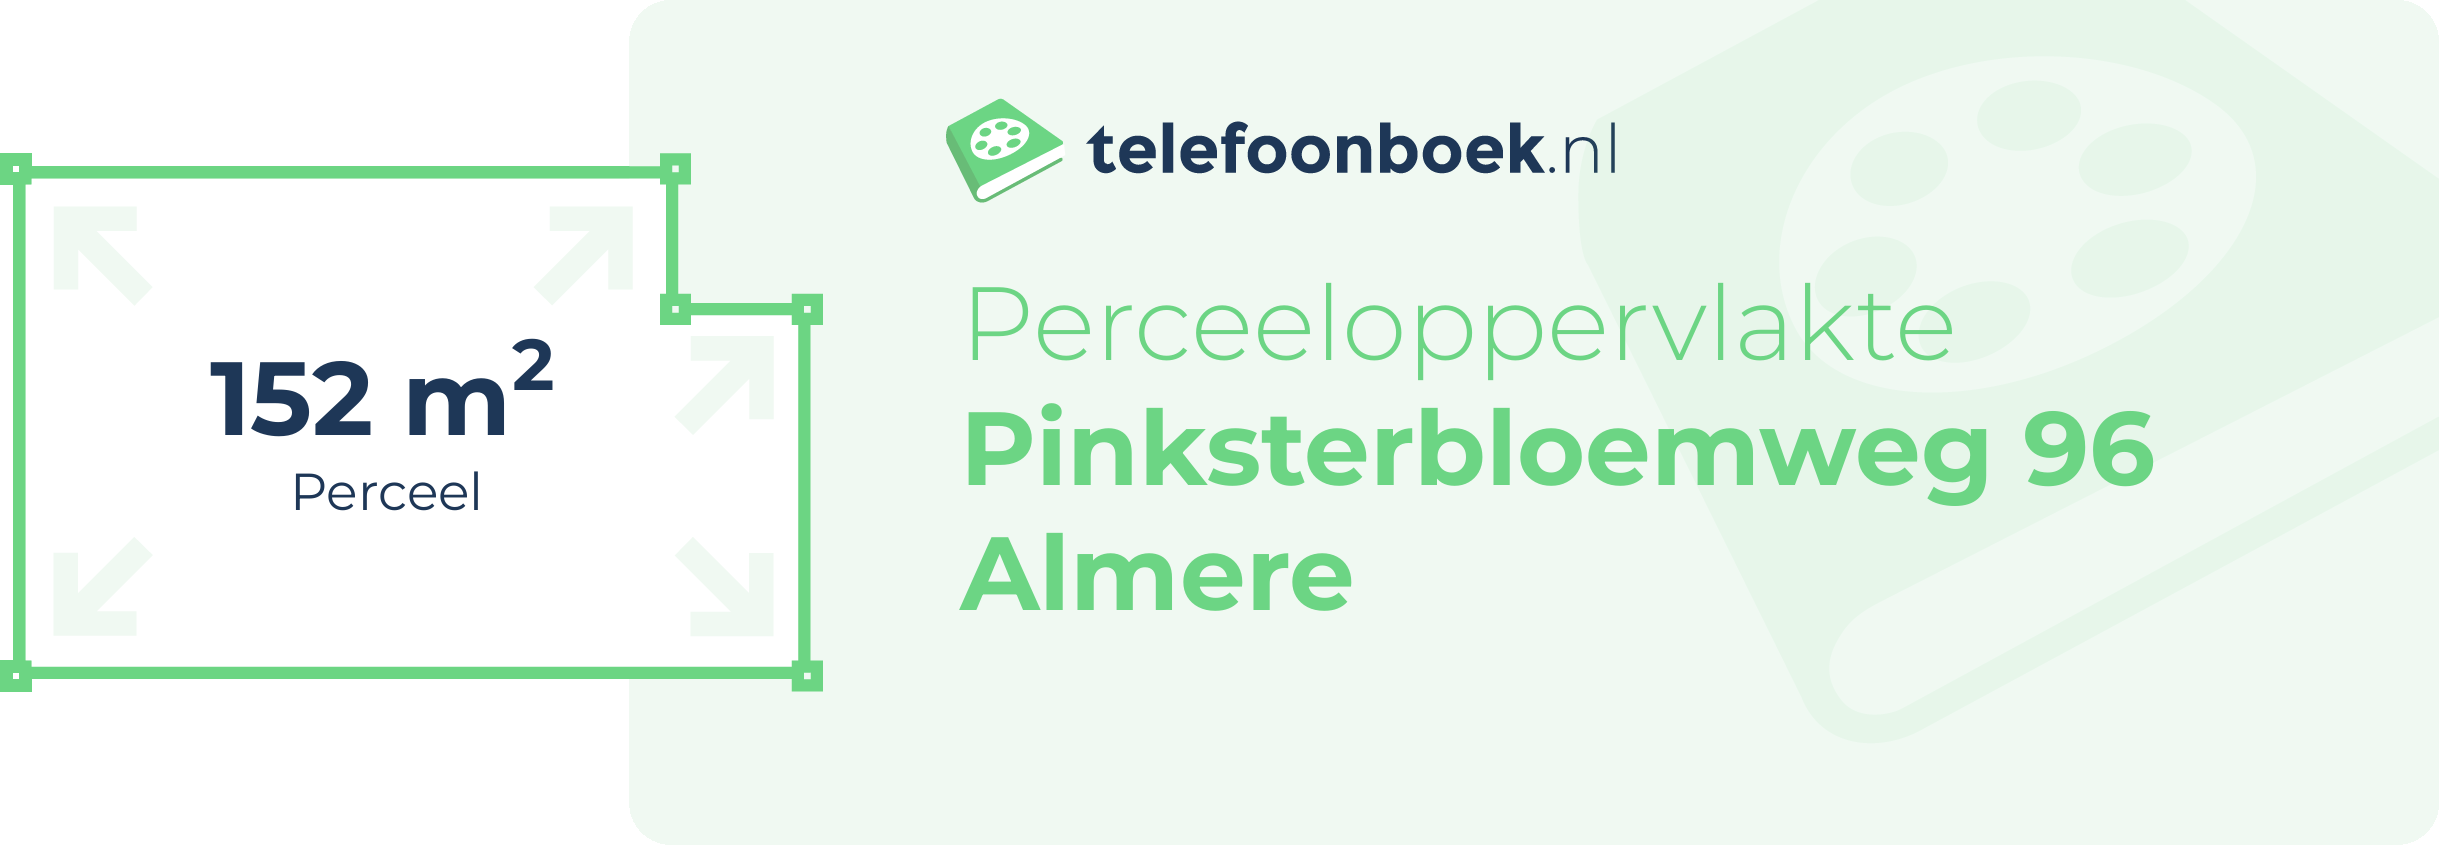 Perceeloppervlakte Pinksterbloemweg 96 Almere